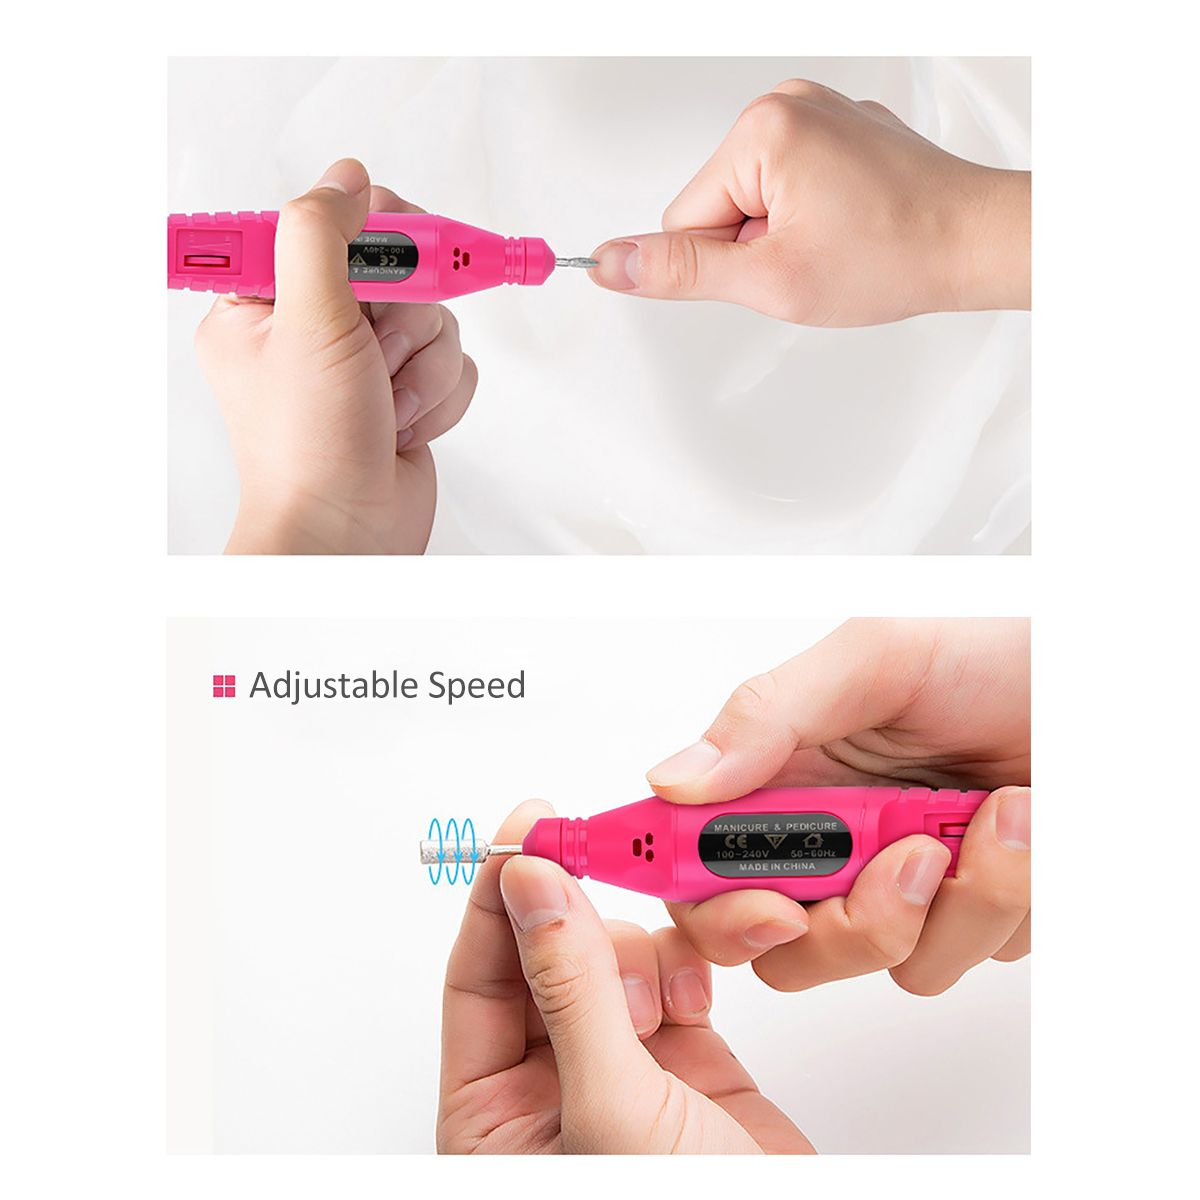 Mini-Portable-Electric-Nail-Drill-Machine-Manicure-Pedicure-Polishing-Tool--6-Nail-Drill-Bits-1679874